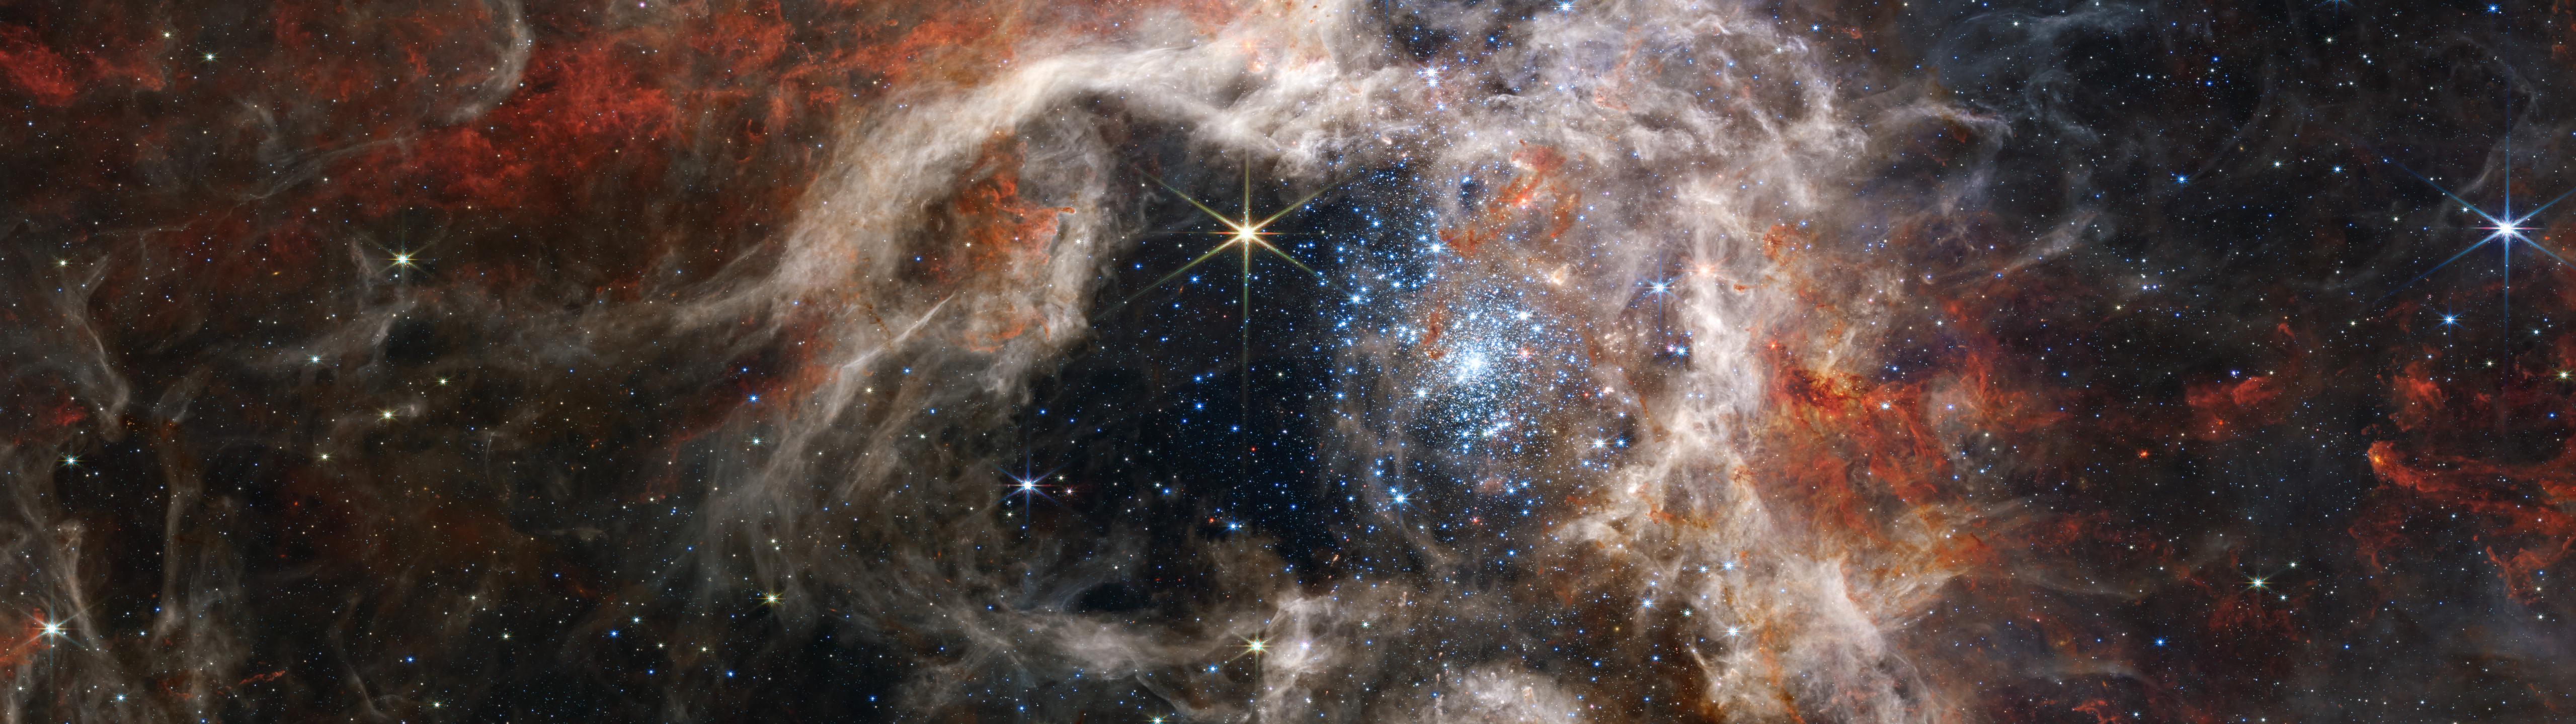 HD wallpaper, James Webb Space Telescope, Ultrawide, Nebula, Science, Stars, Tarantula Nebula, Infrared, Space